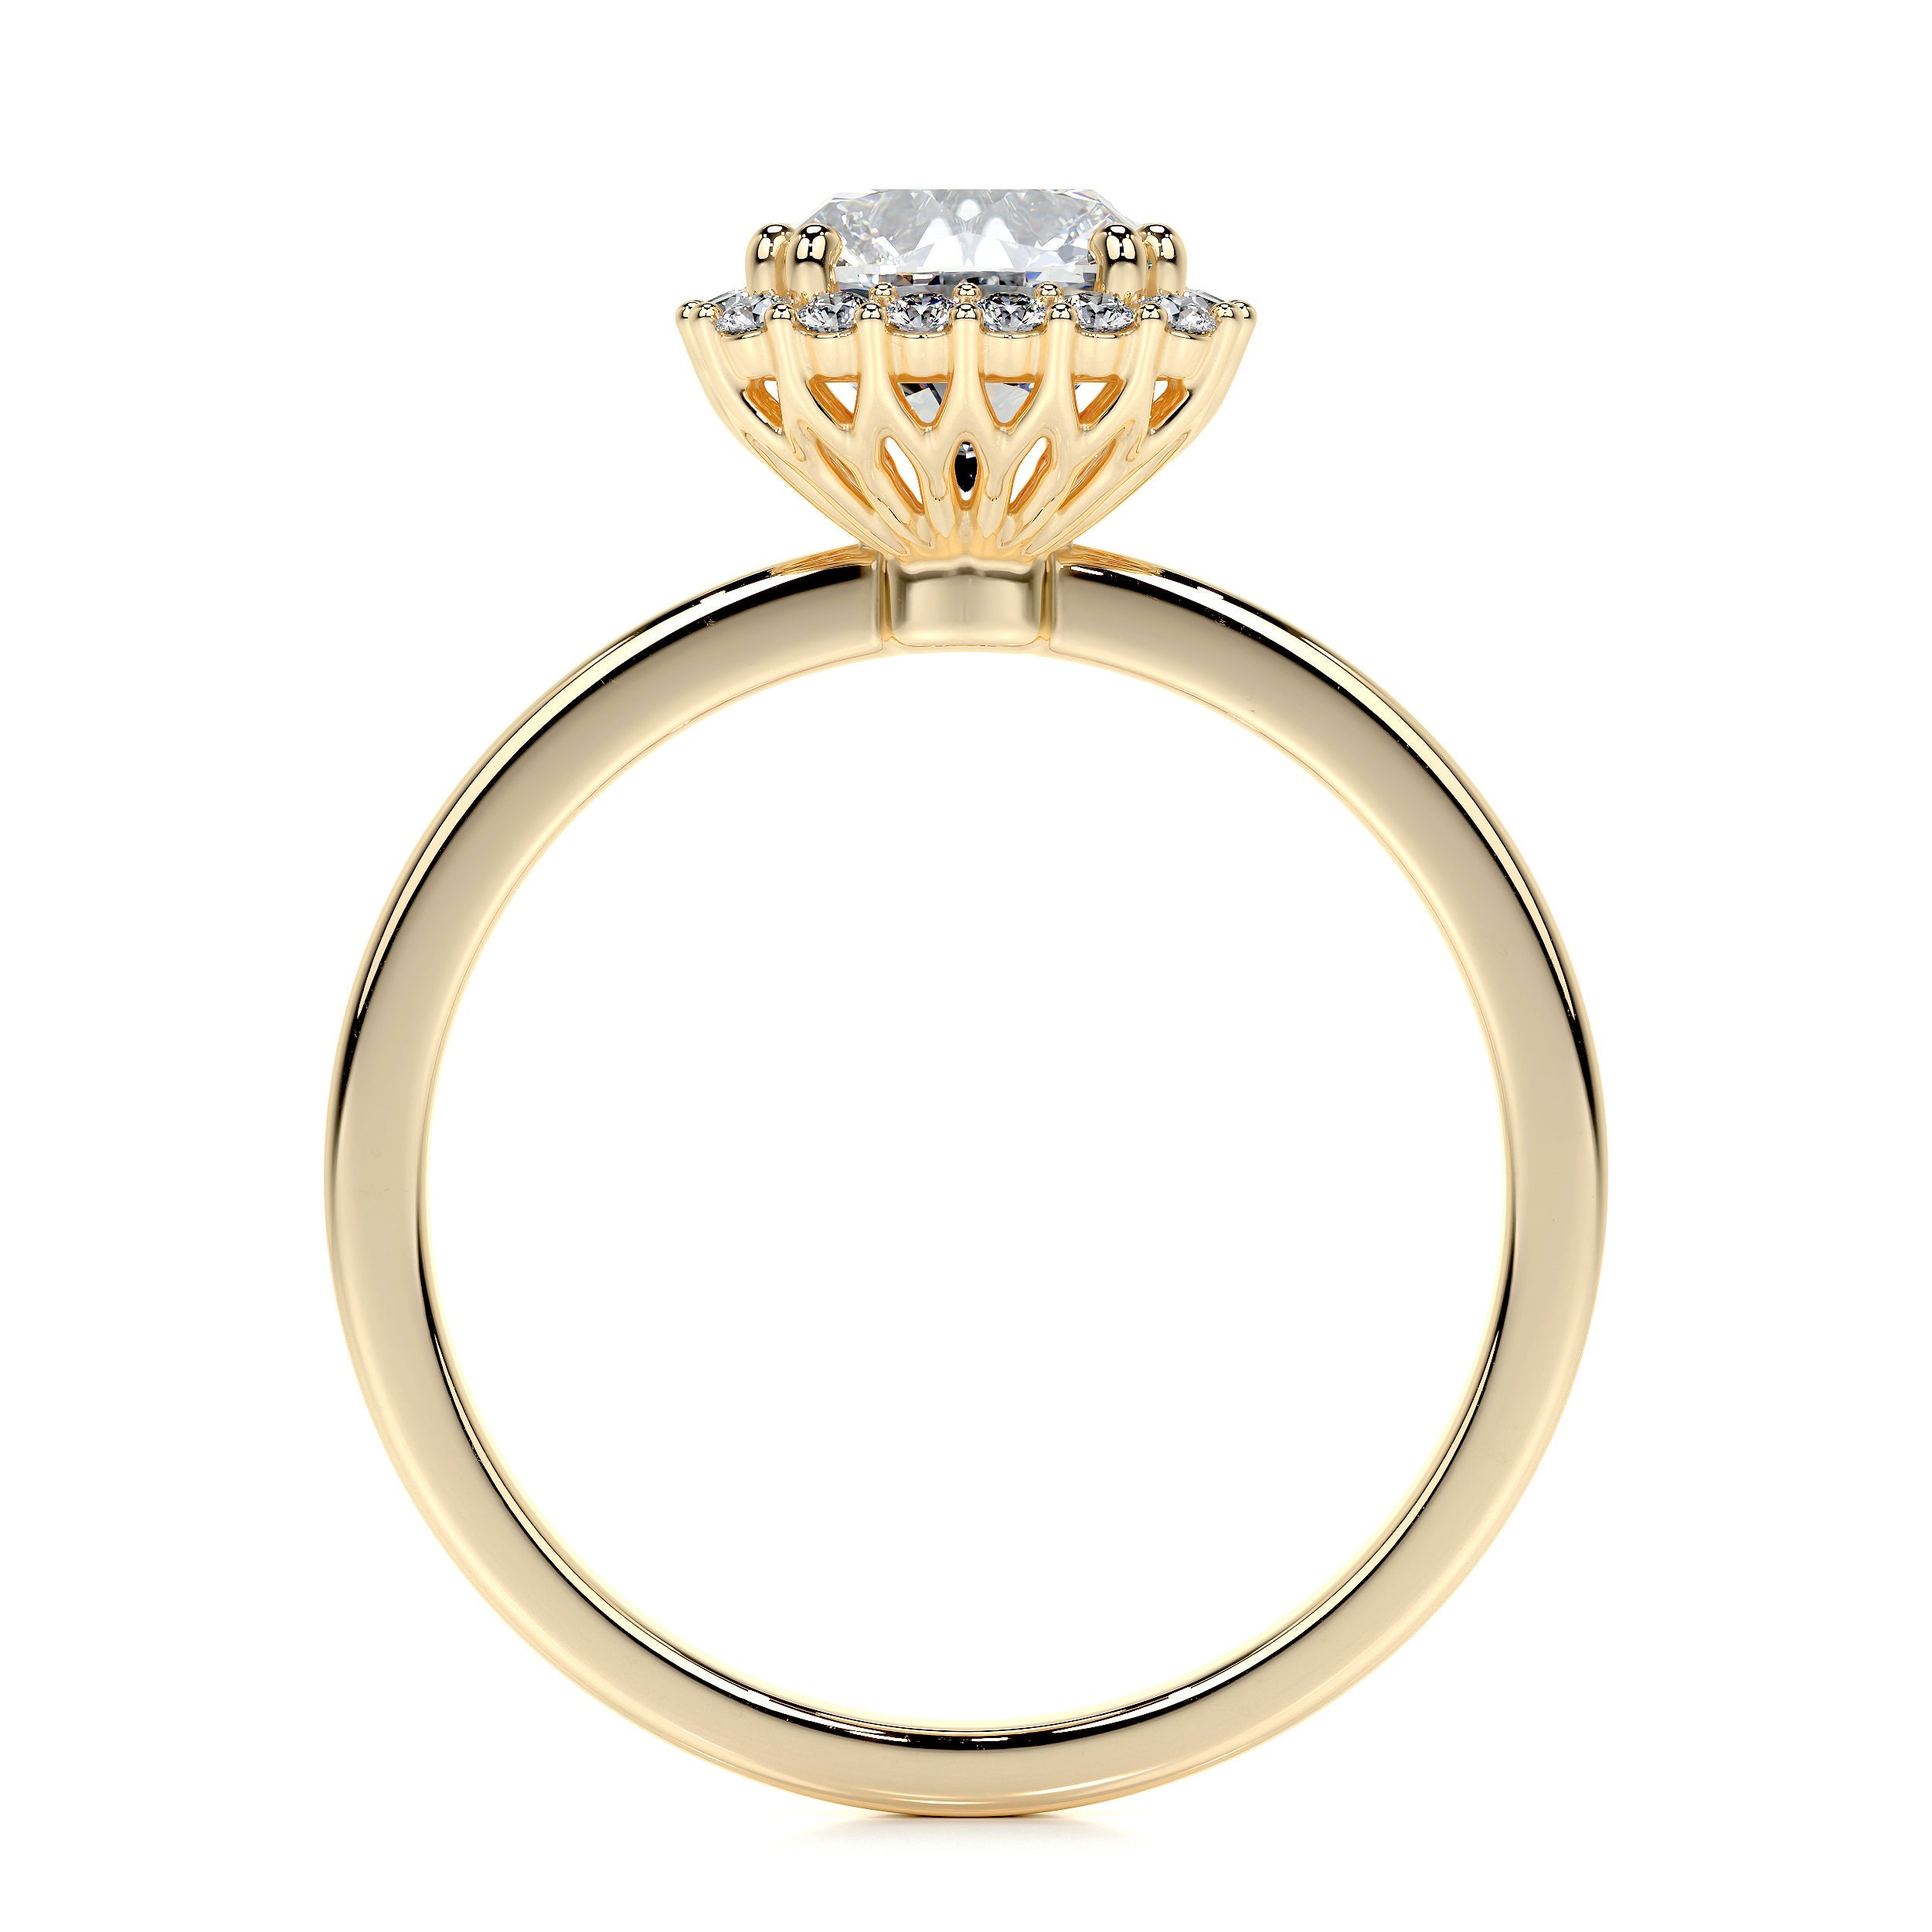 Emery Lab Grown Diamond Ring   (1.75 Carat) - 18K Yellow Gold